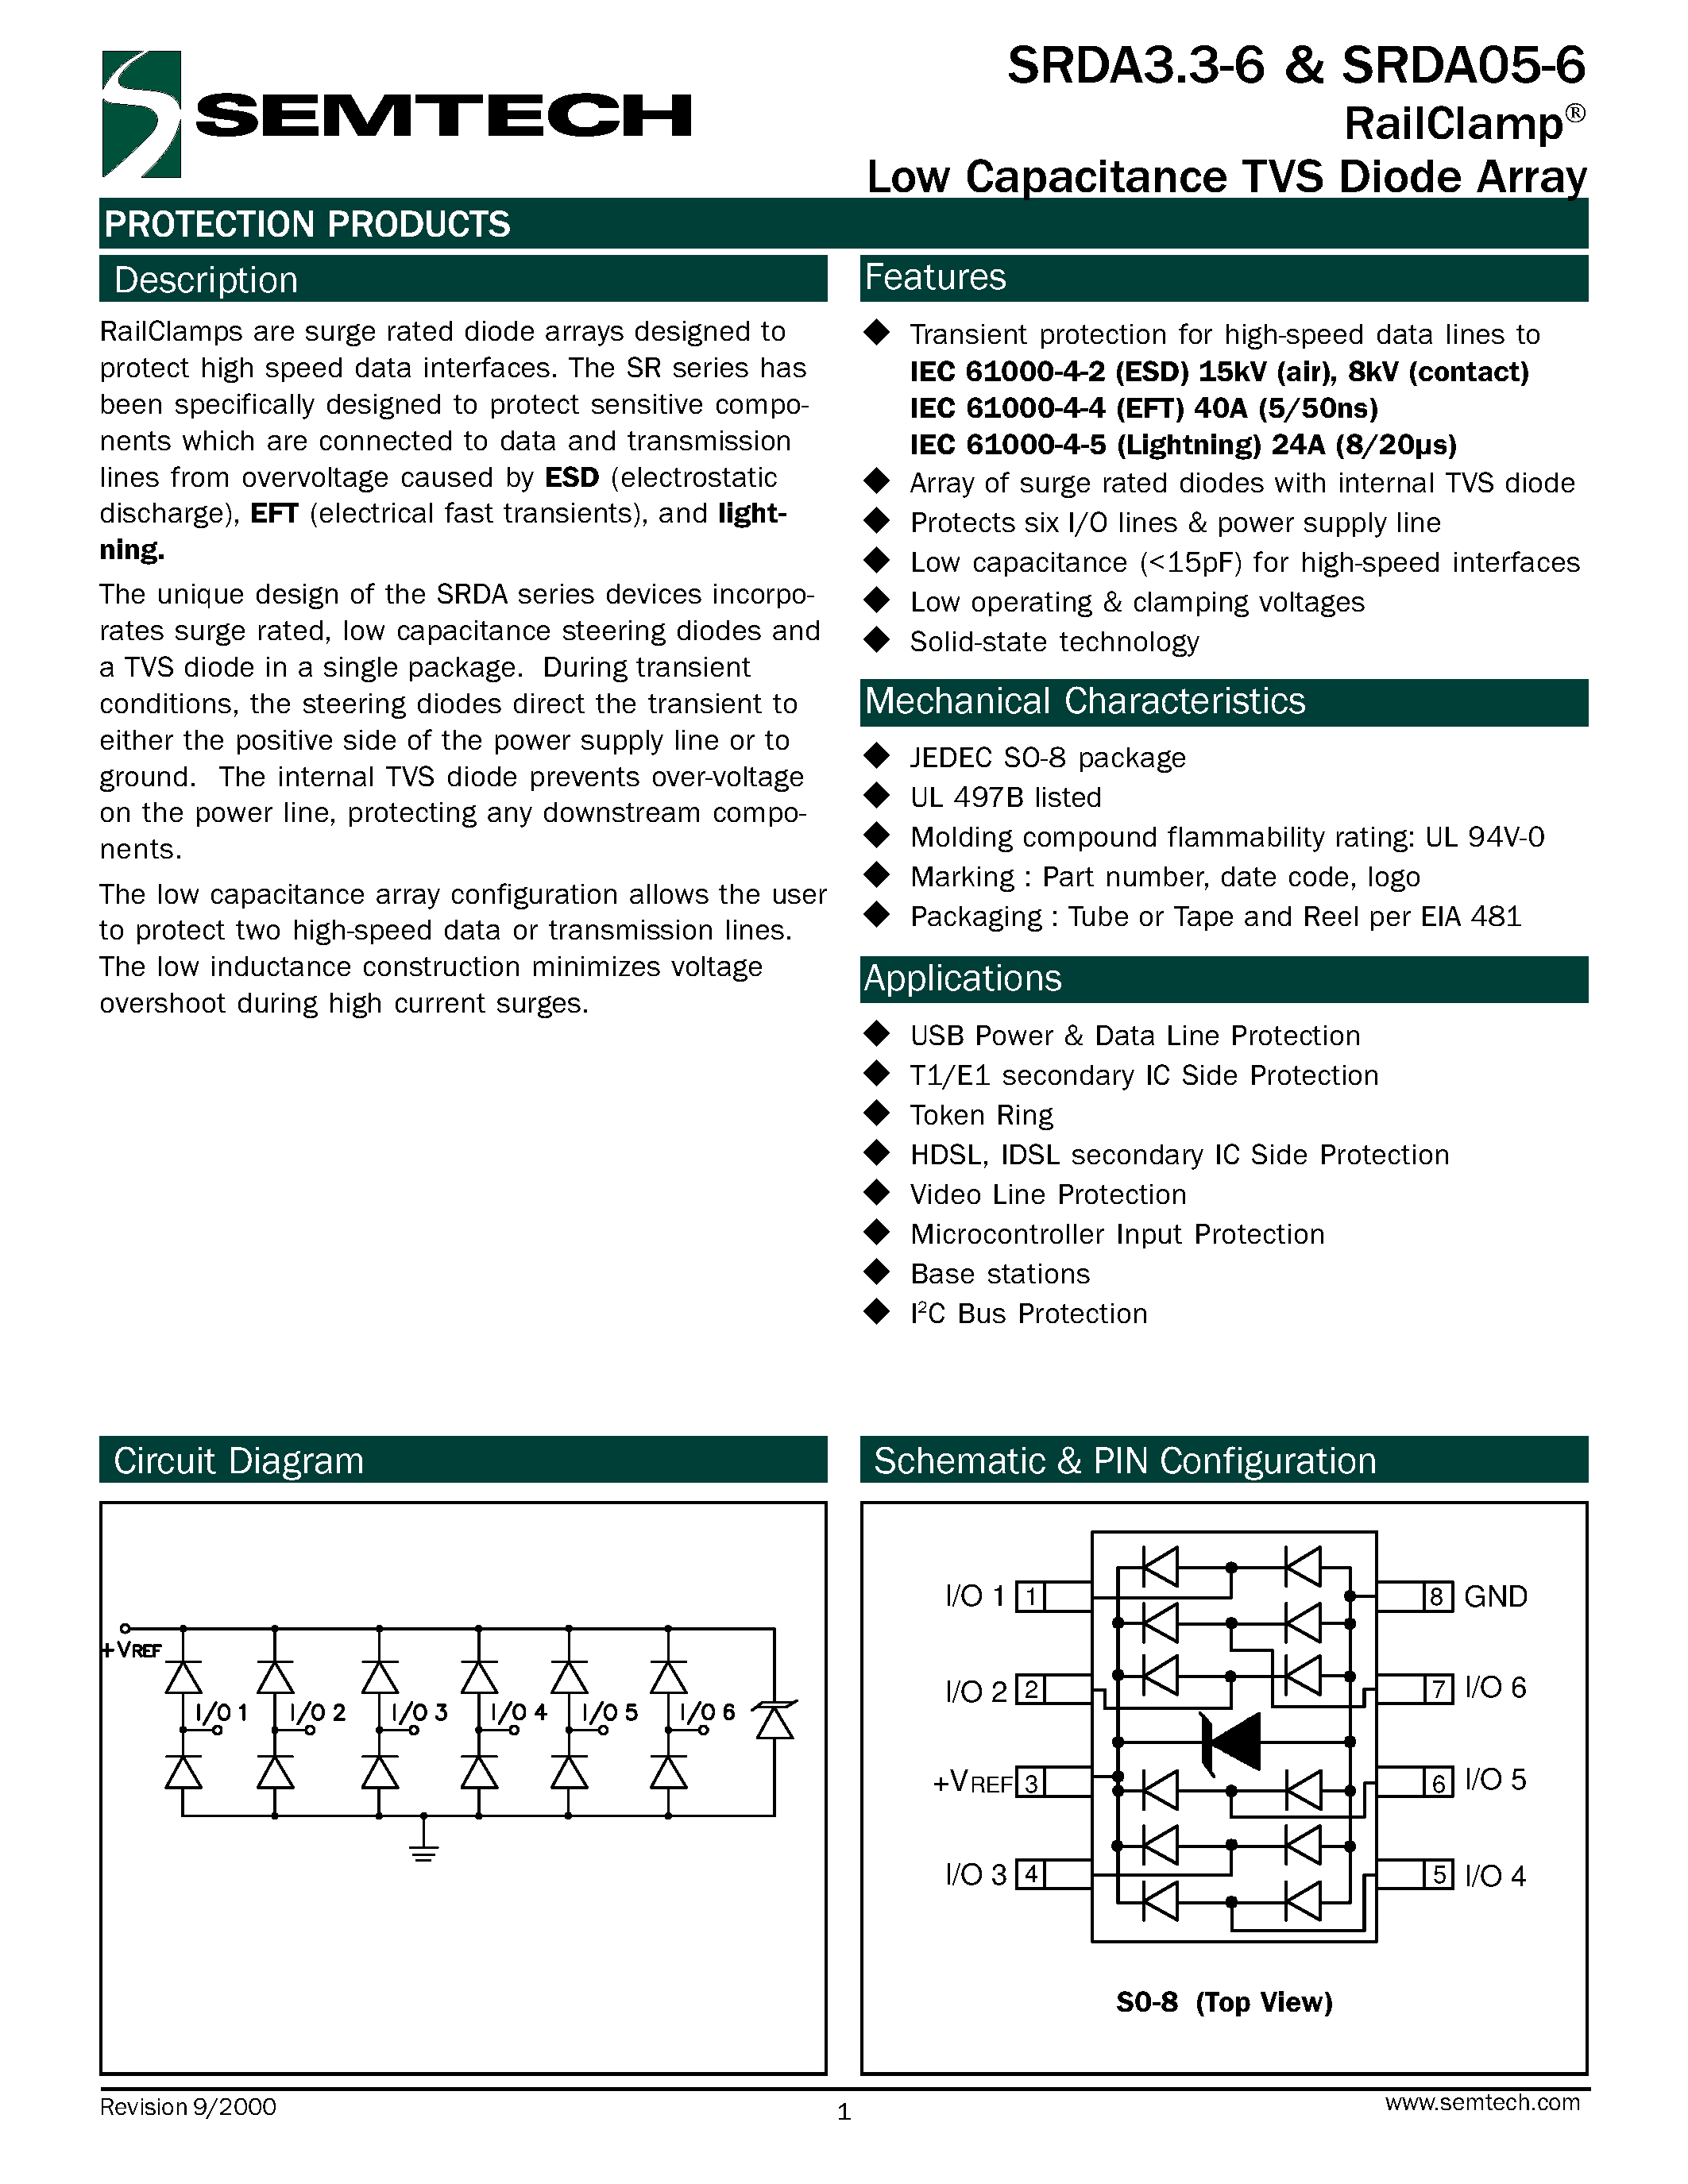 Datasheet SRDA05-6 - RailClamp Low Capacitance TVS Diode Array page 1